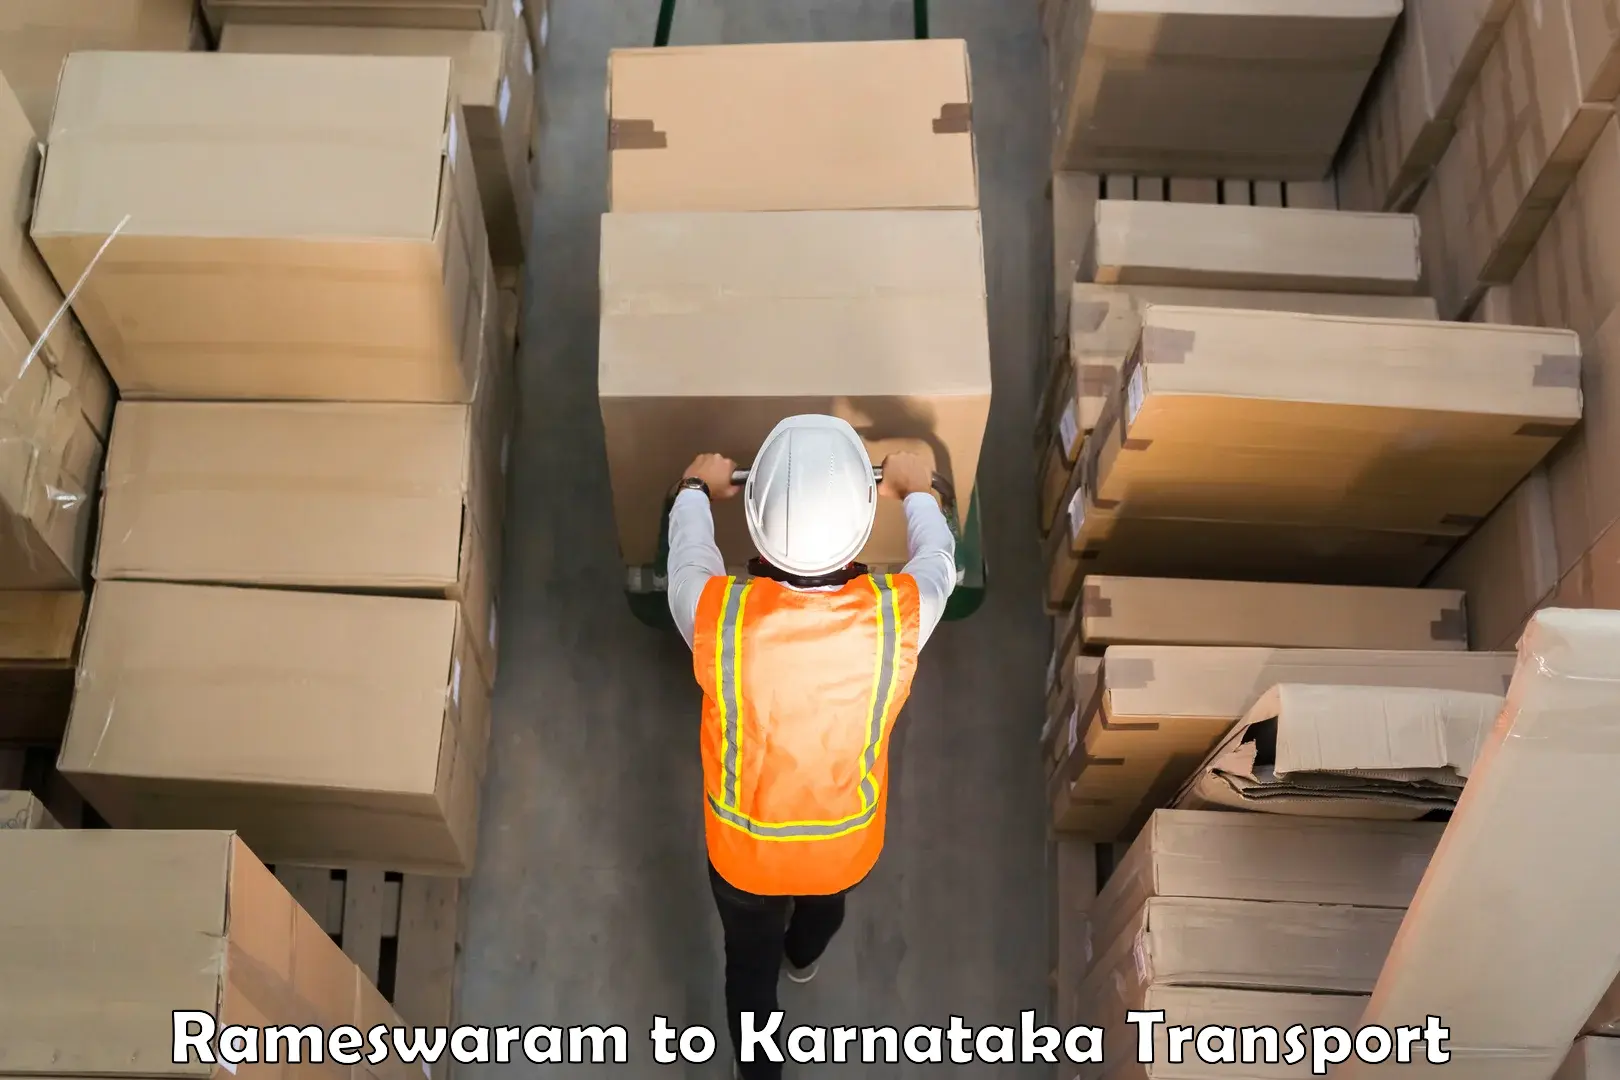 Goods delivery service Rameswaram to Yadgiri